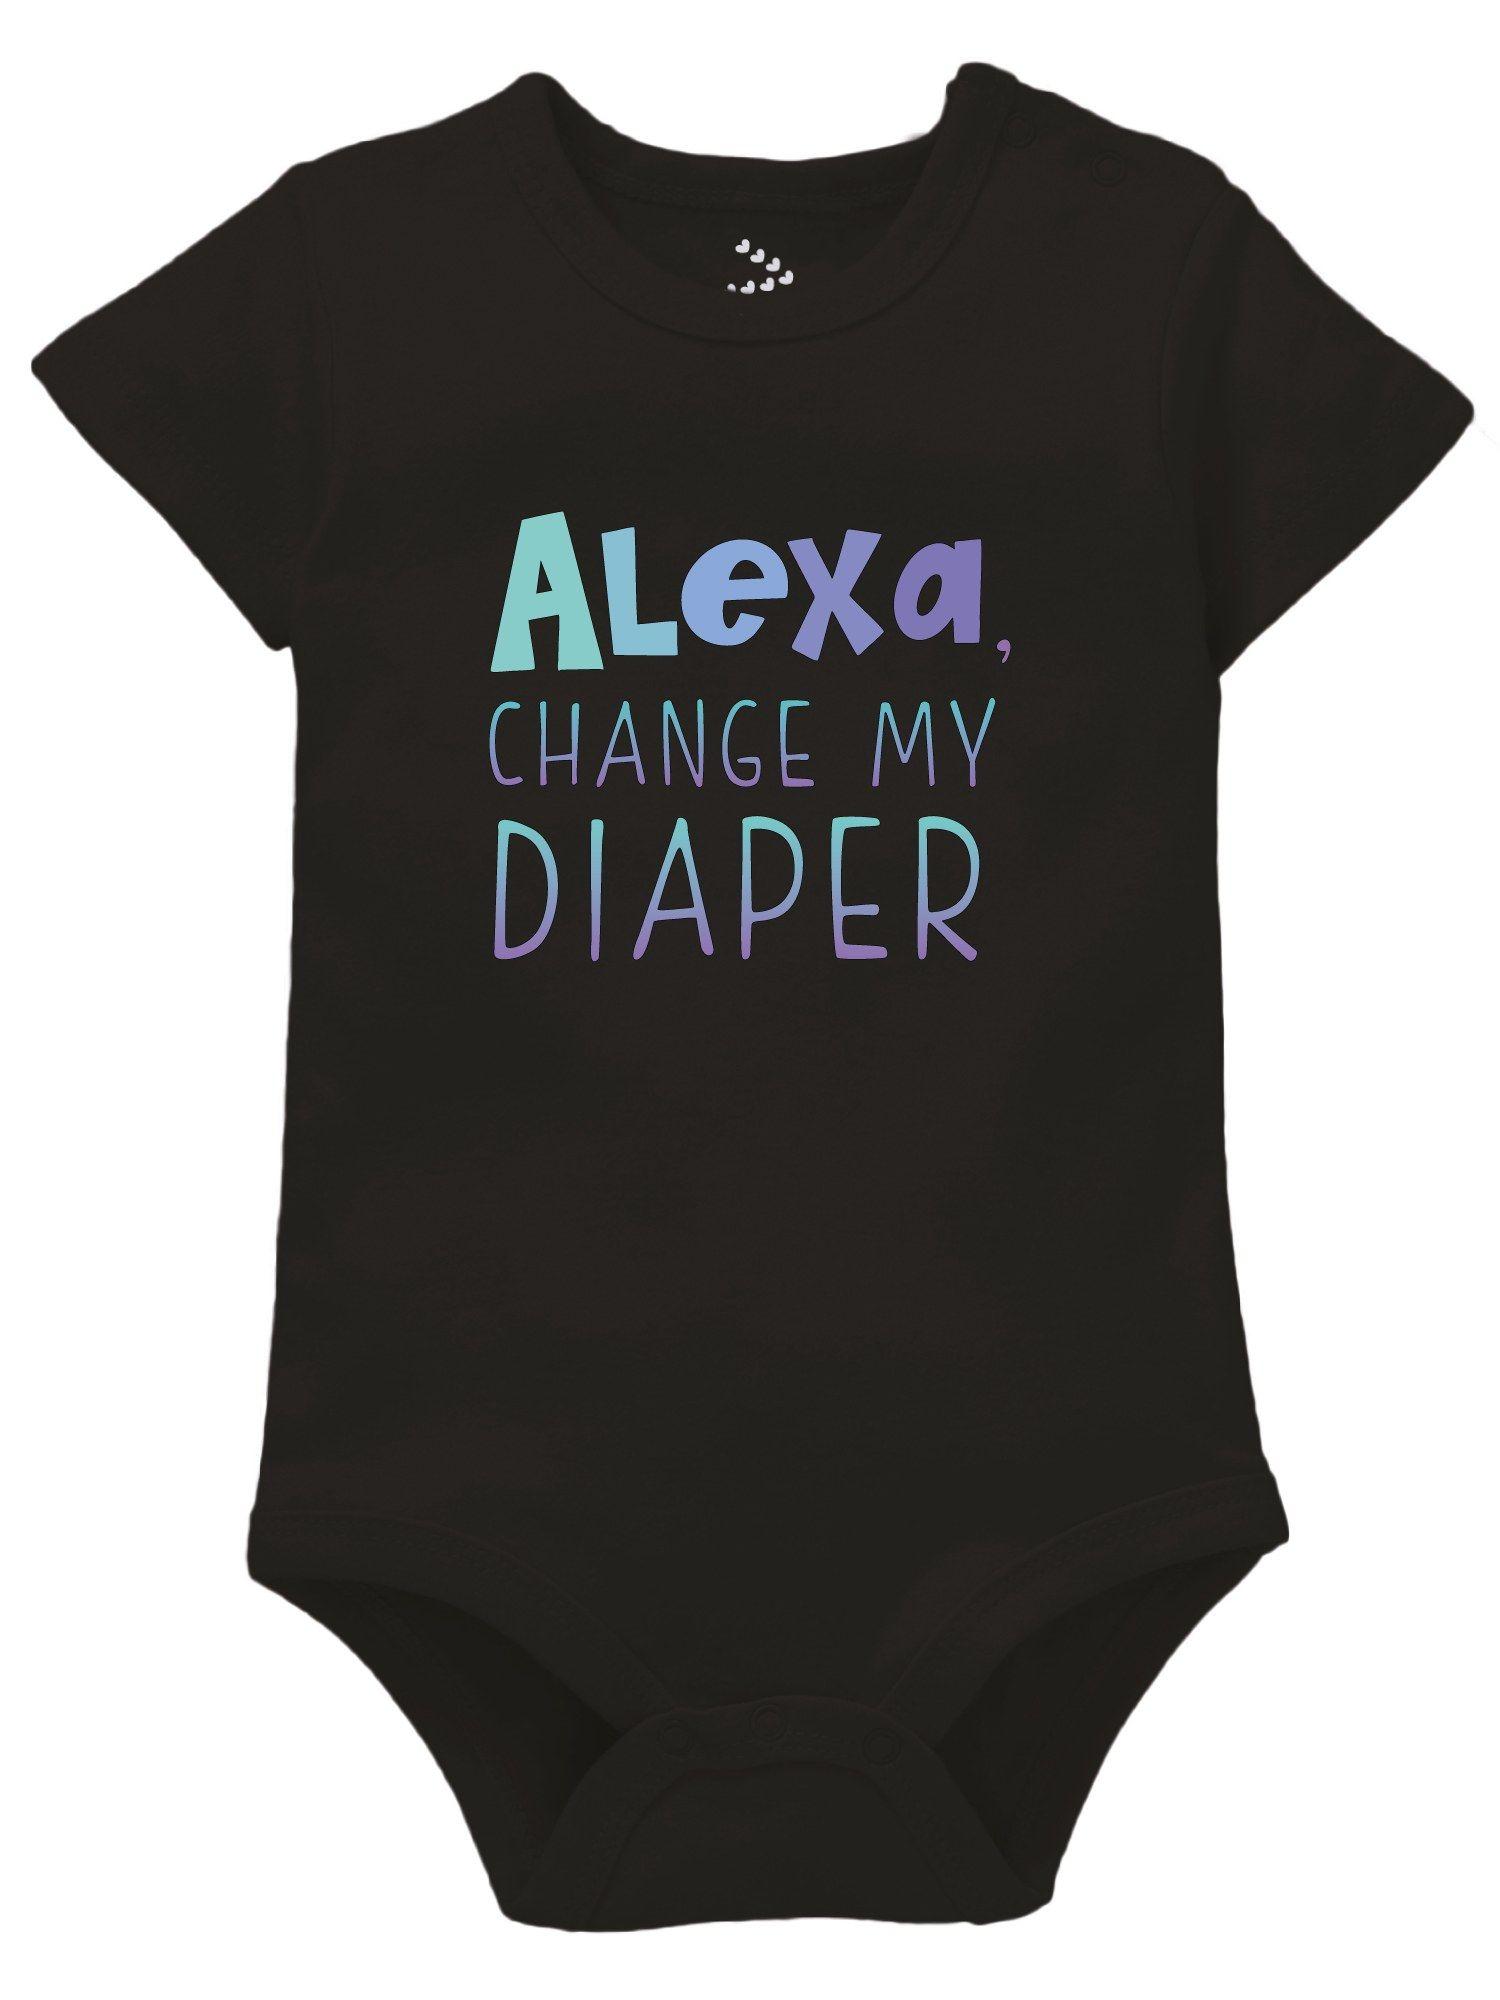 Alexa Change Diaper Baby Onesie Bodysuit New Born Black